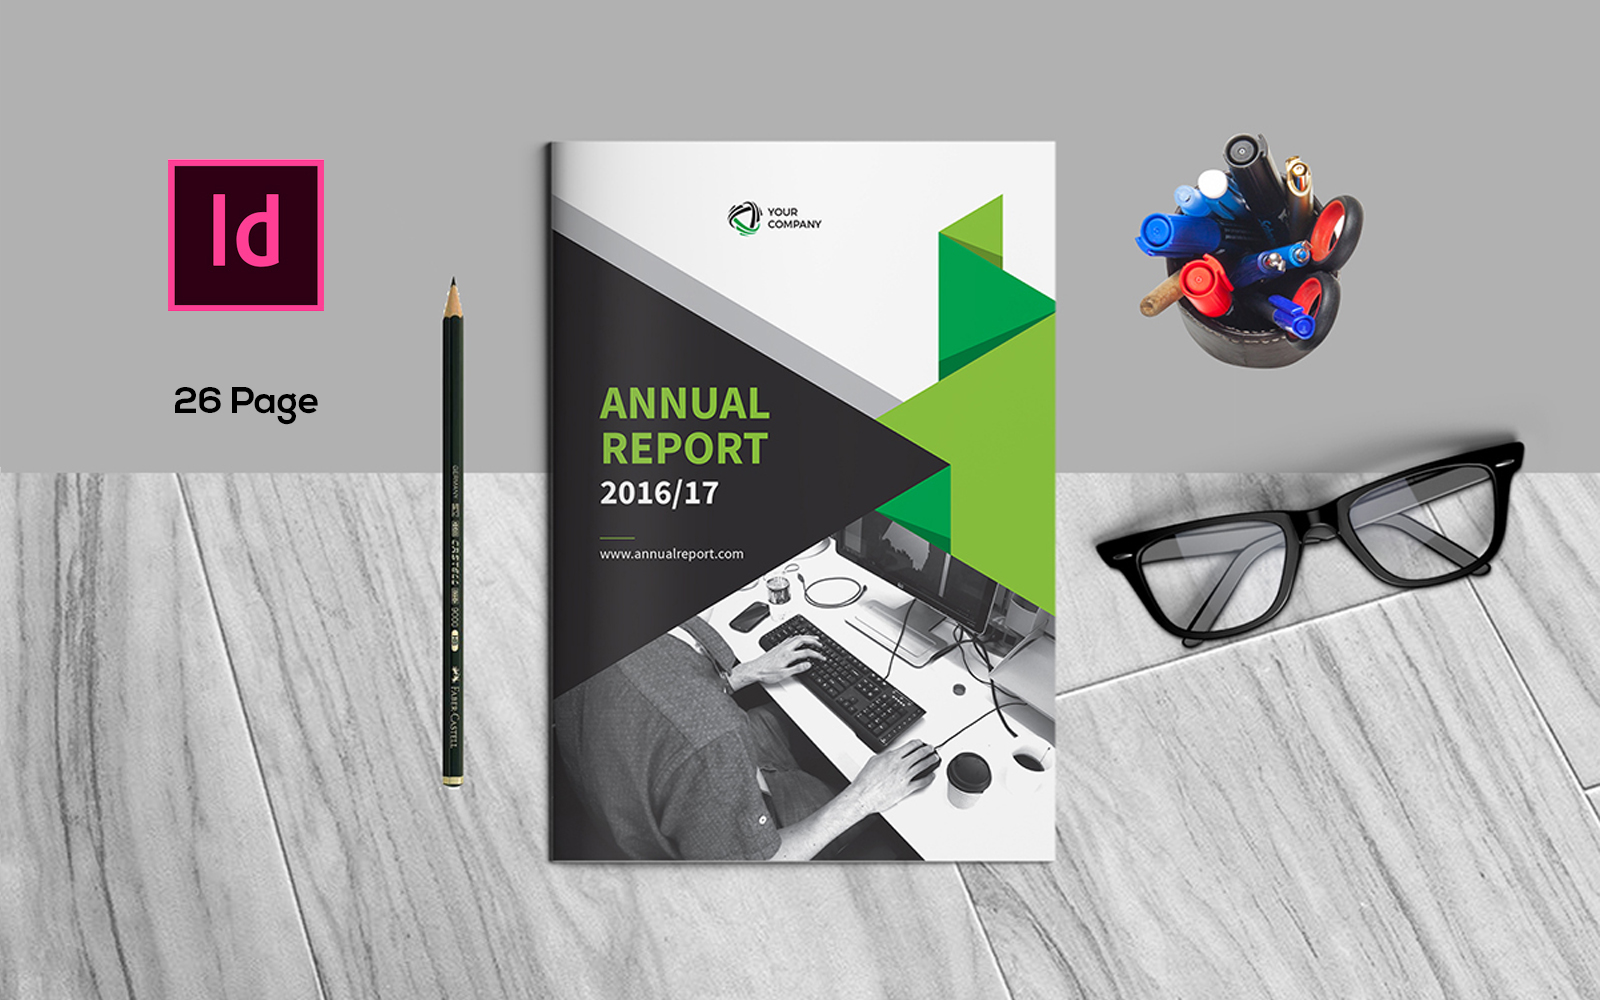 Annual Report 2020 - Corporate Identity Template